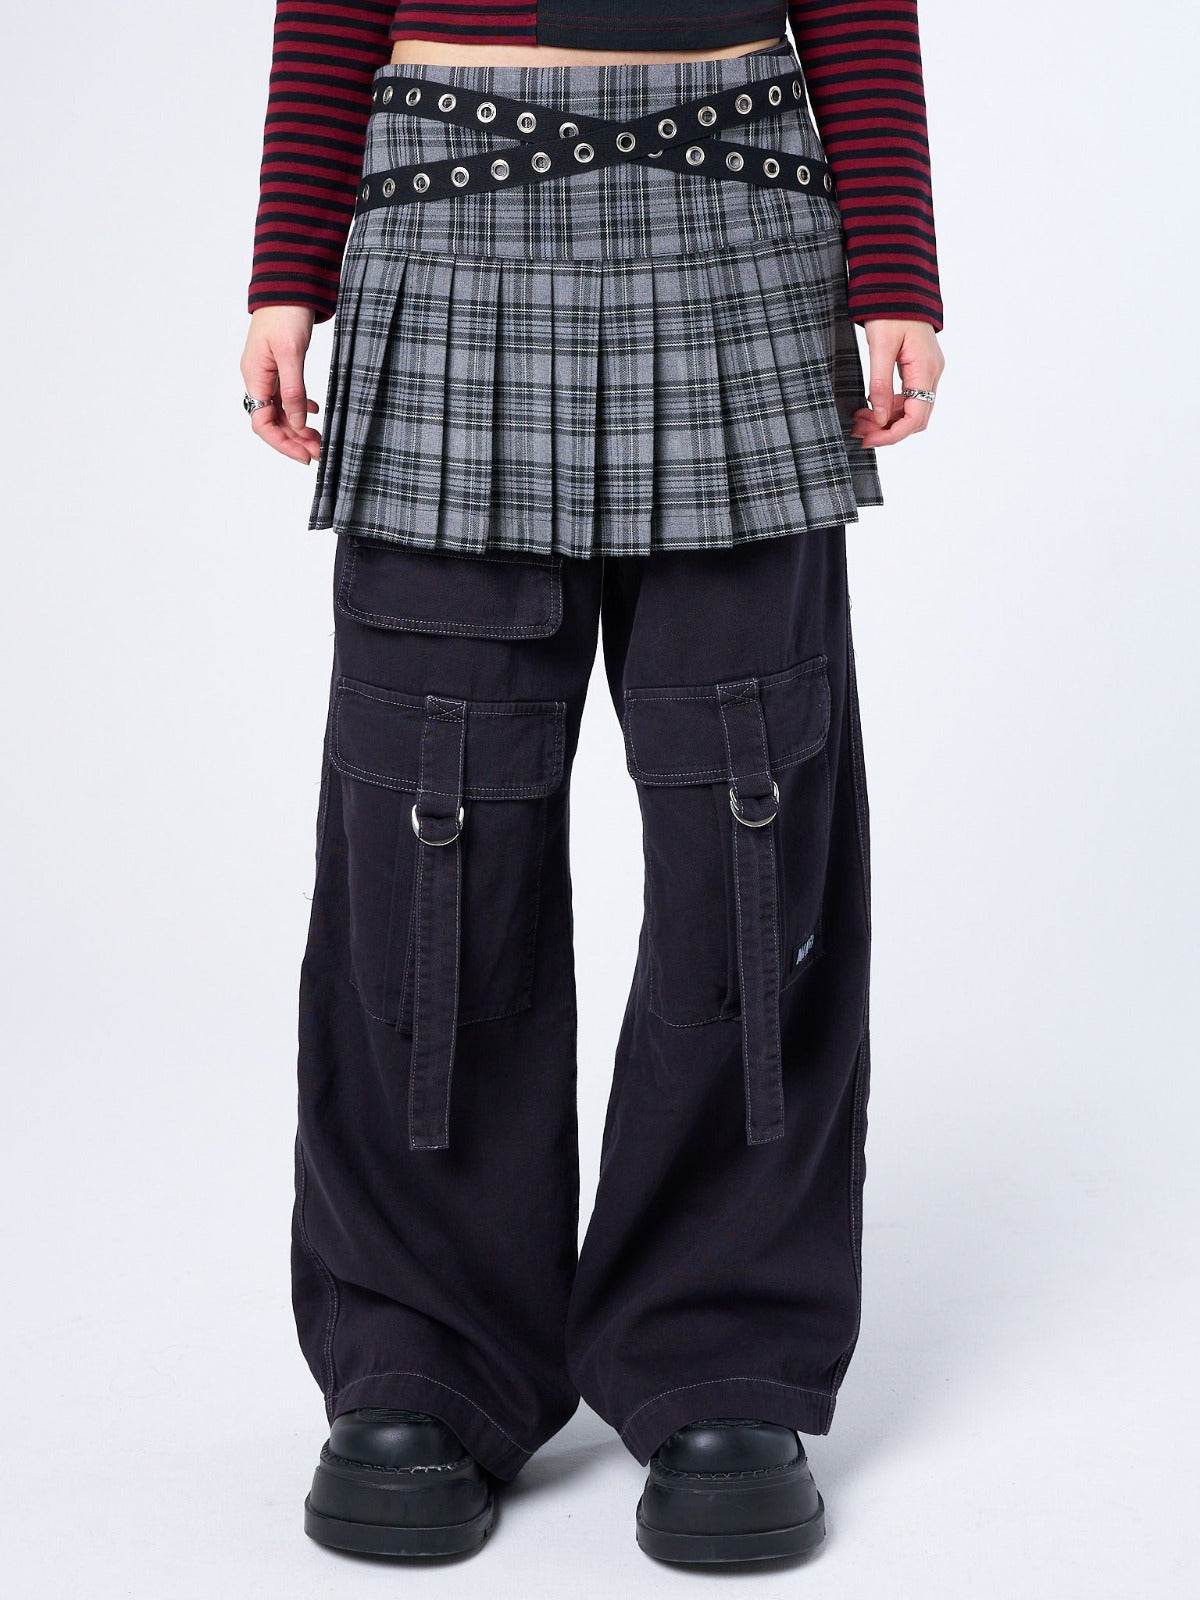 Meryl Grey & Black Tartan Mini Skirt